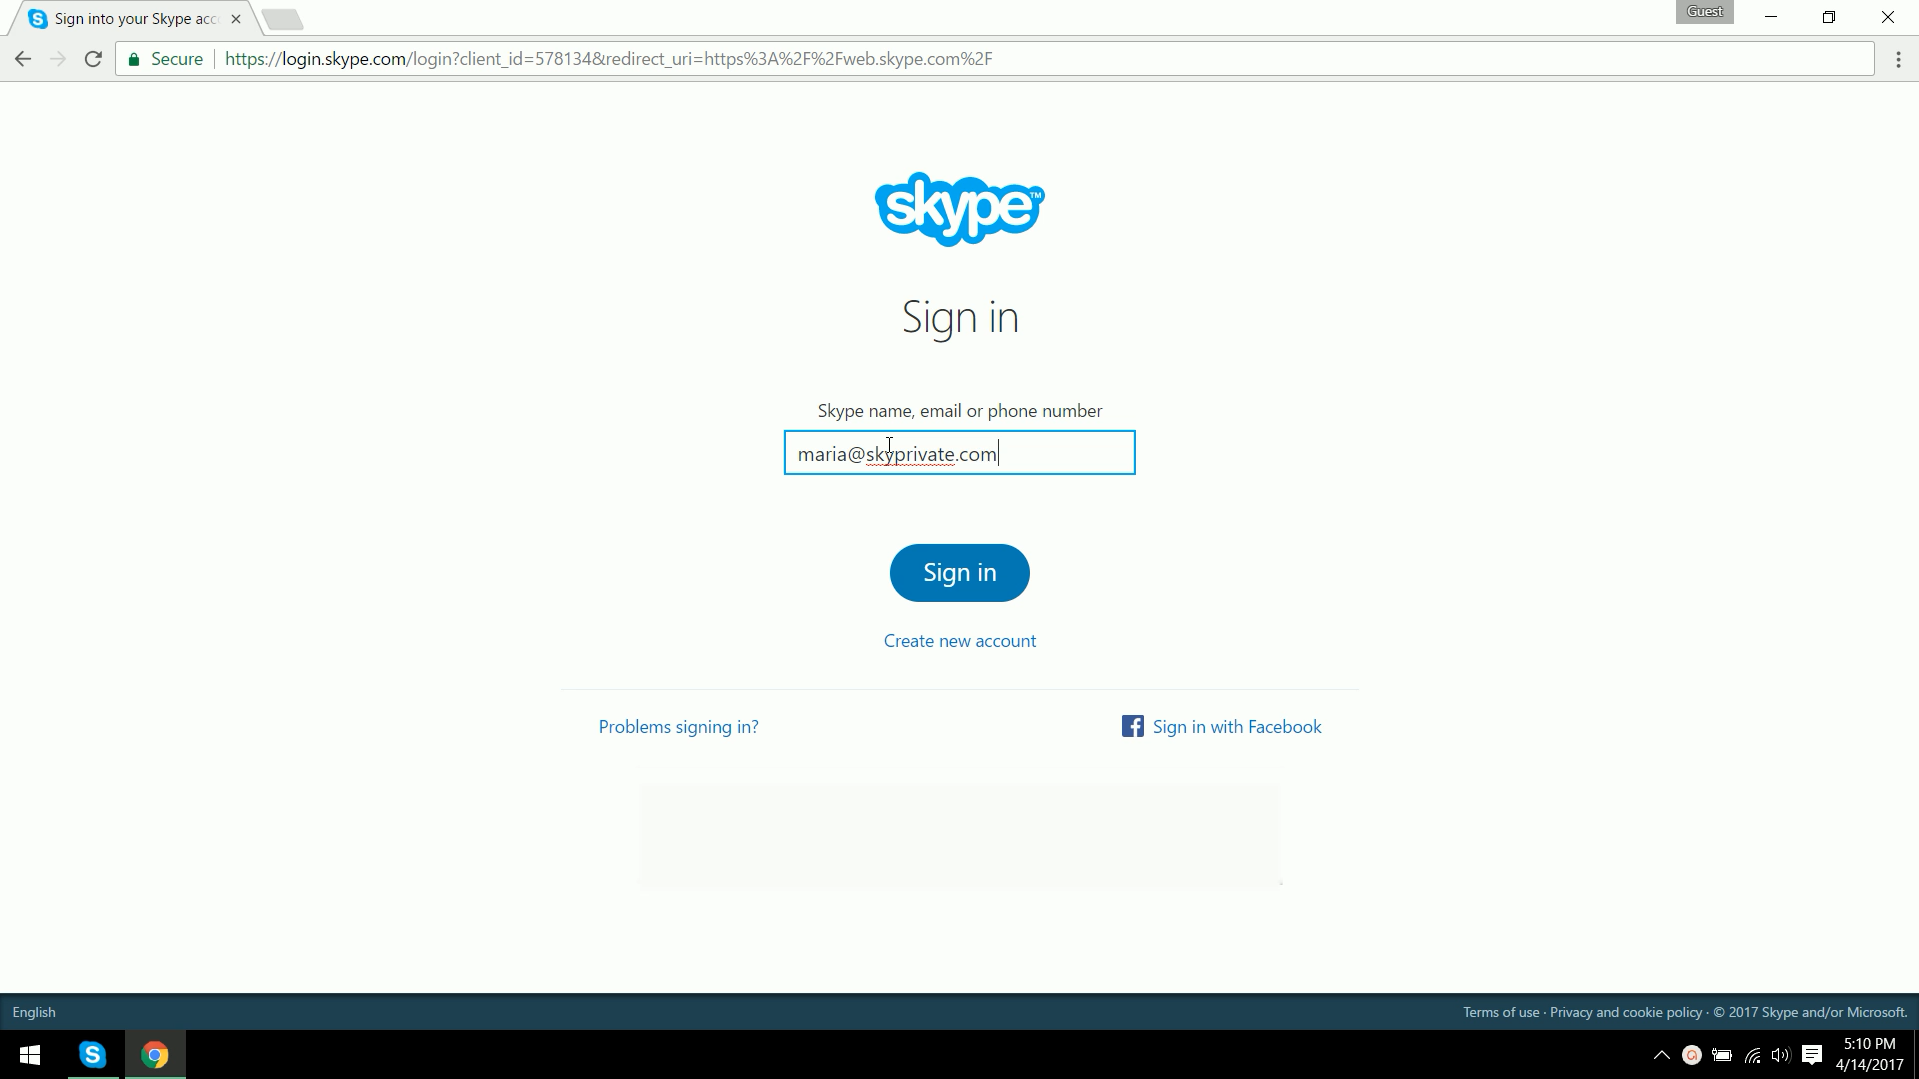 Skype sex accounts